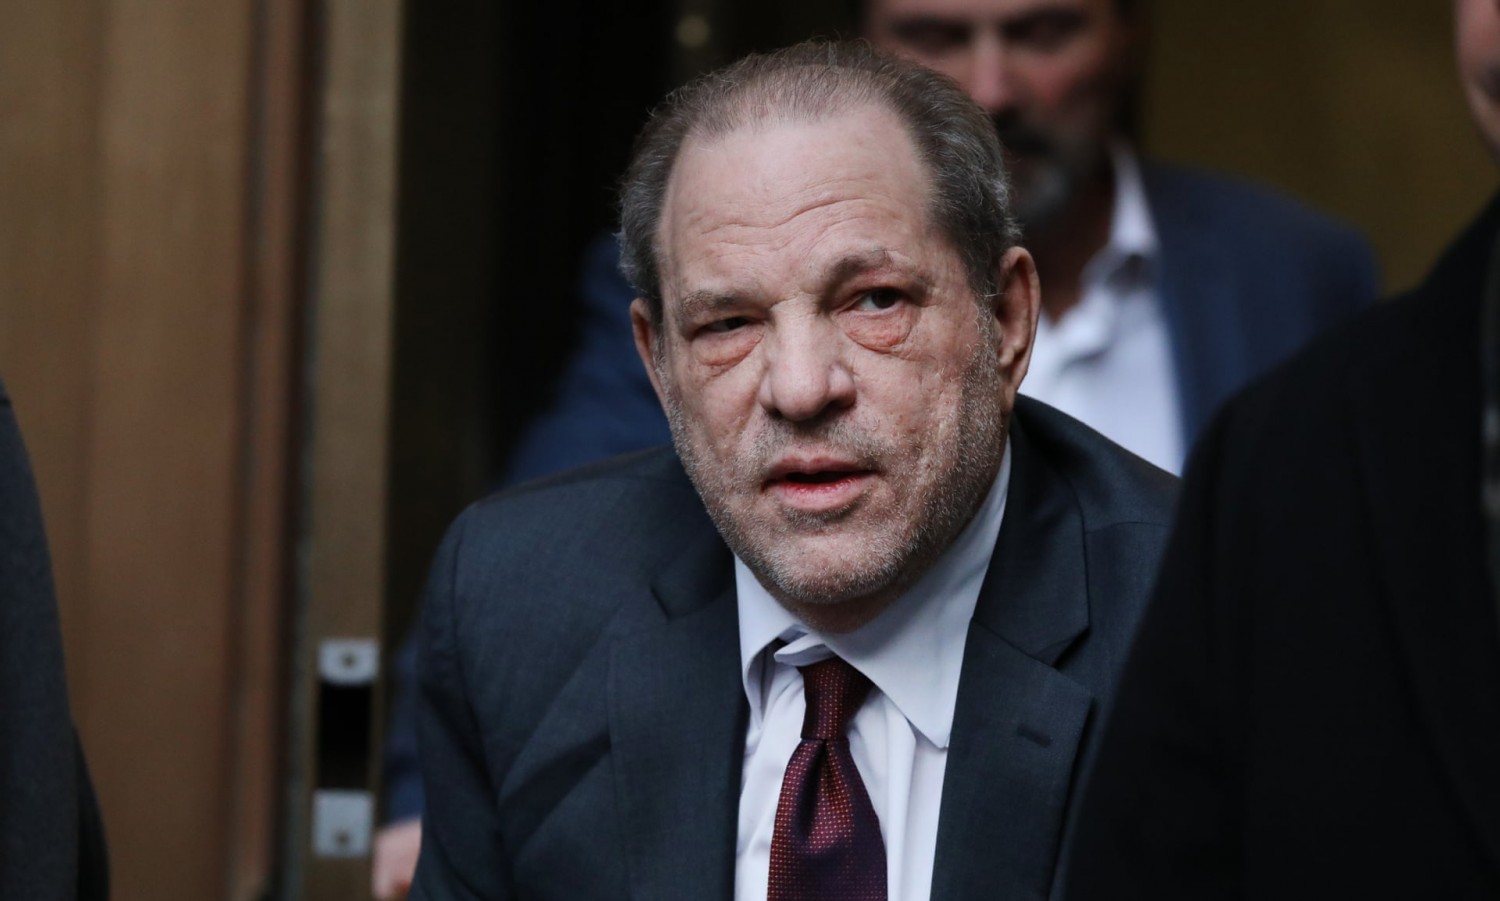 Harvey Weinstein arrives on court on Thursday. Photograph: Spencer Platt/Getty Images